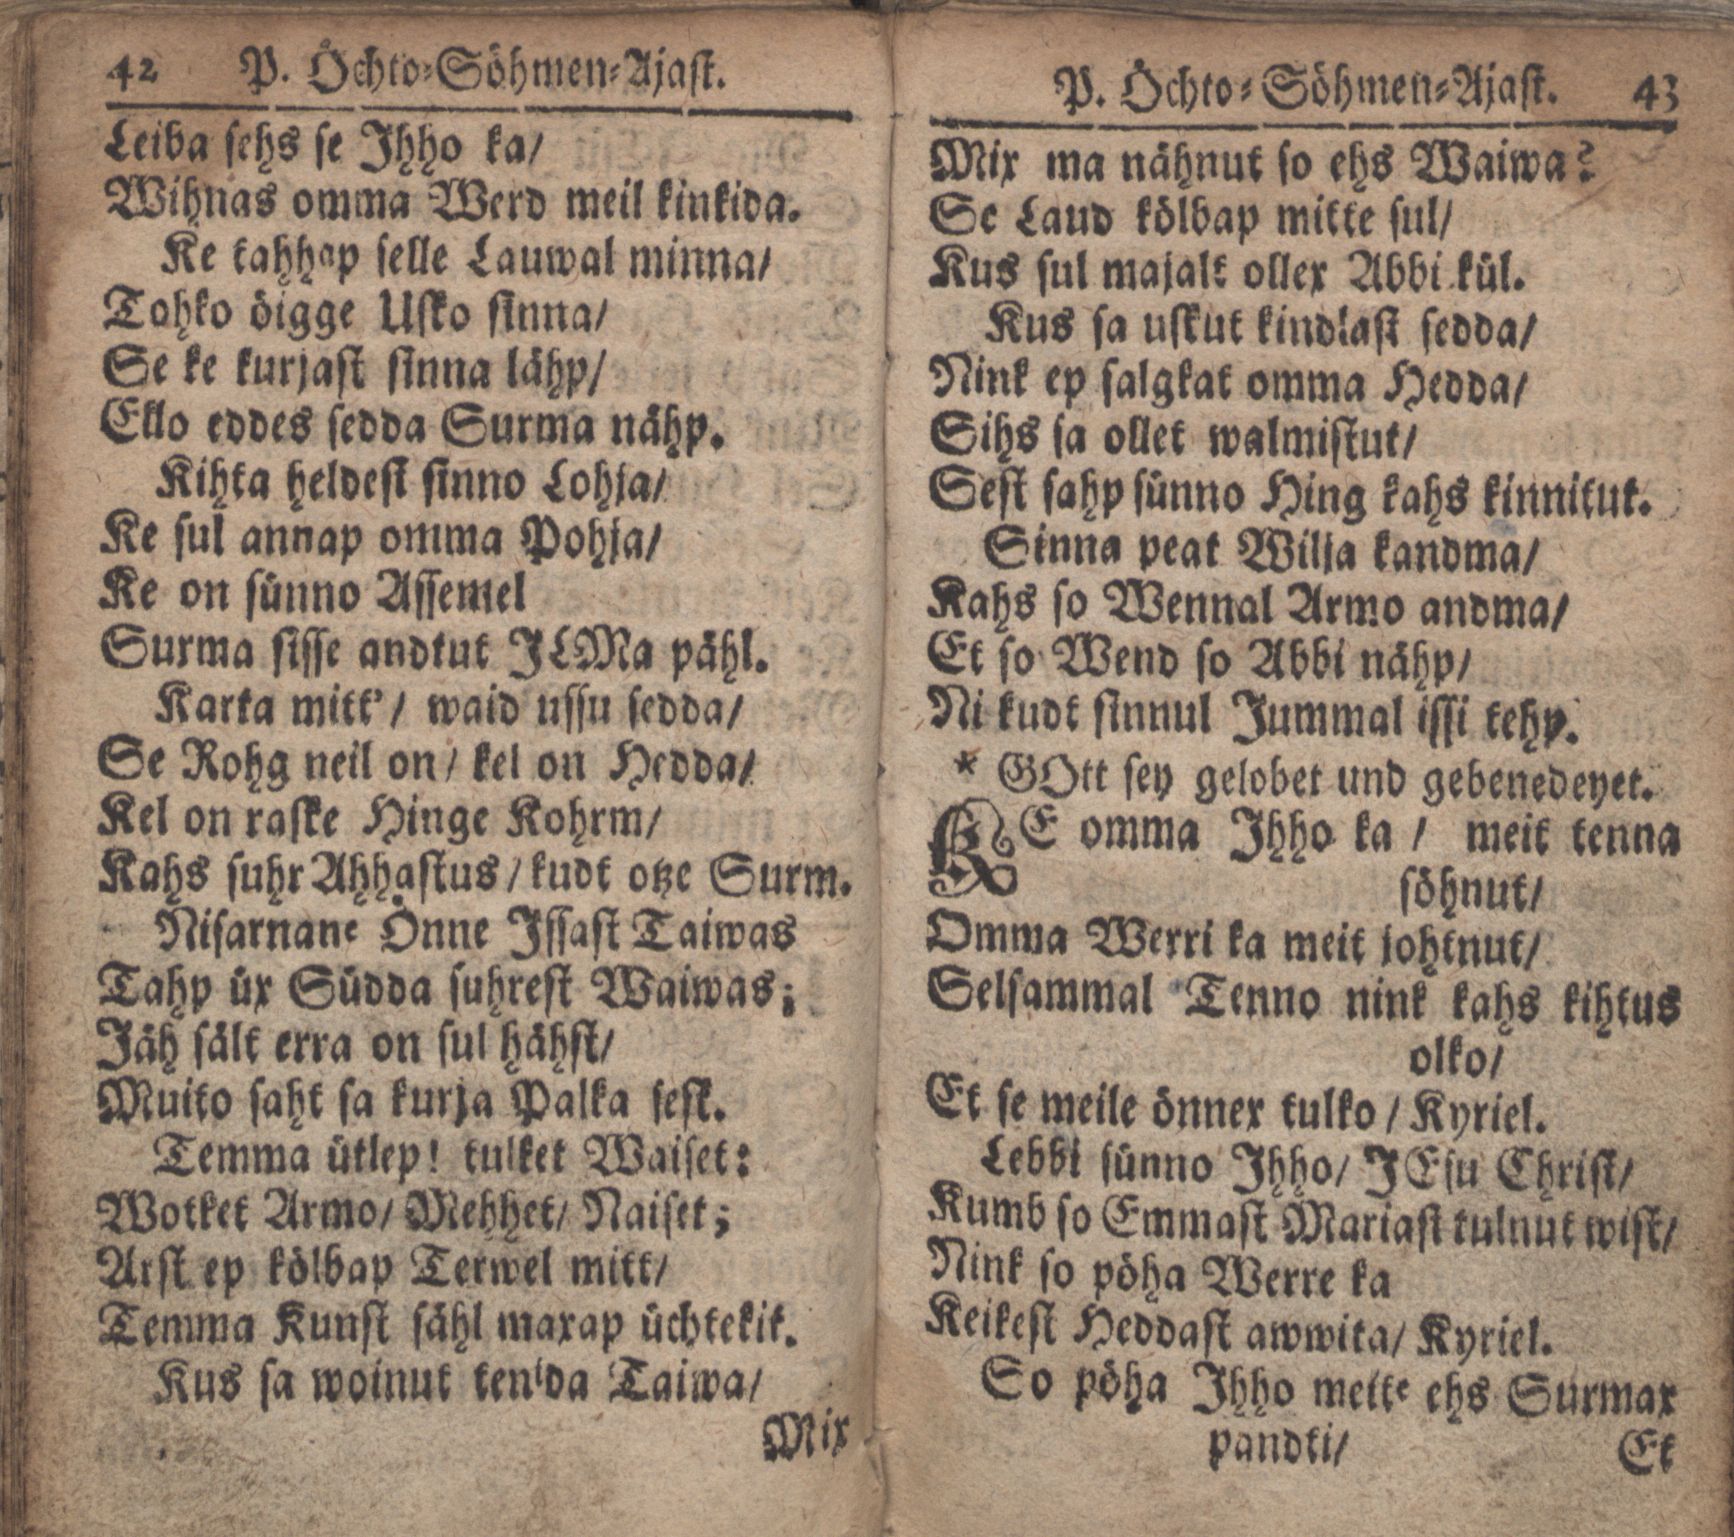 Ma-Kele Laulo-Ramat (1702) | 20. (42-43) Main body of text